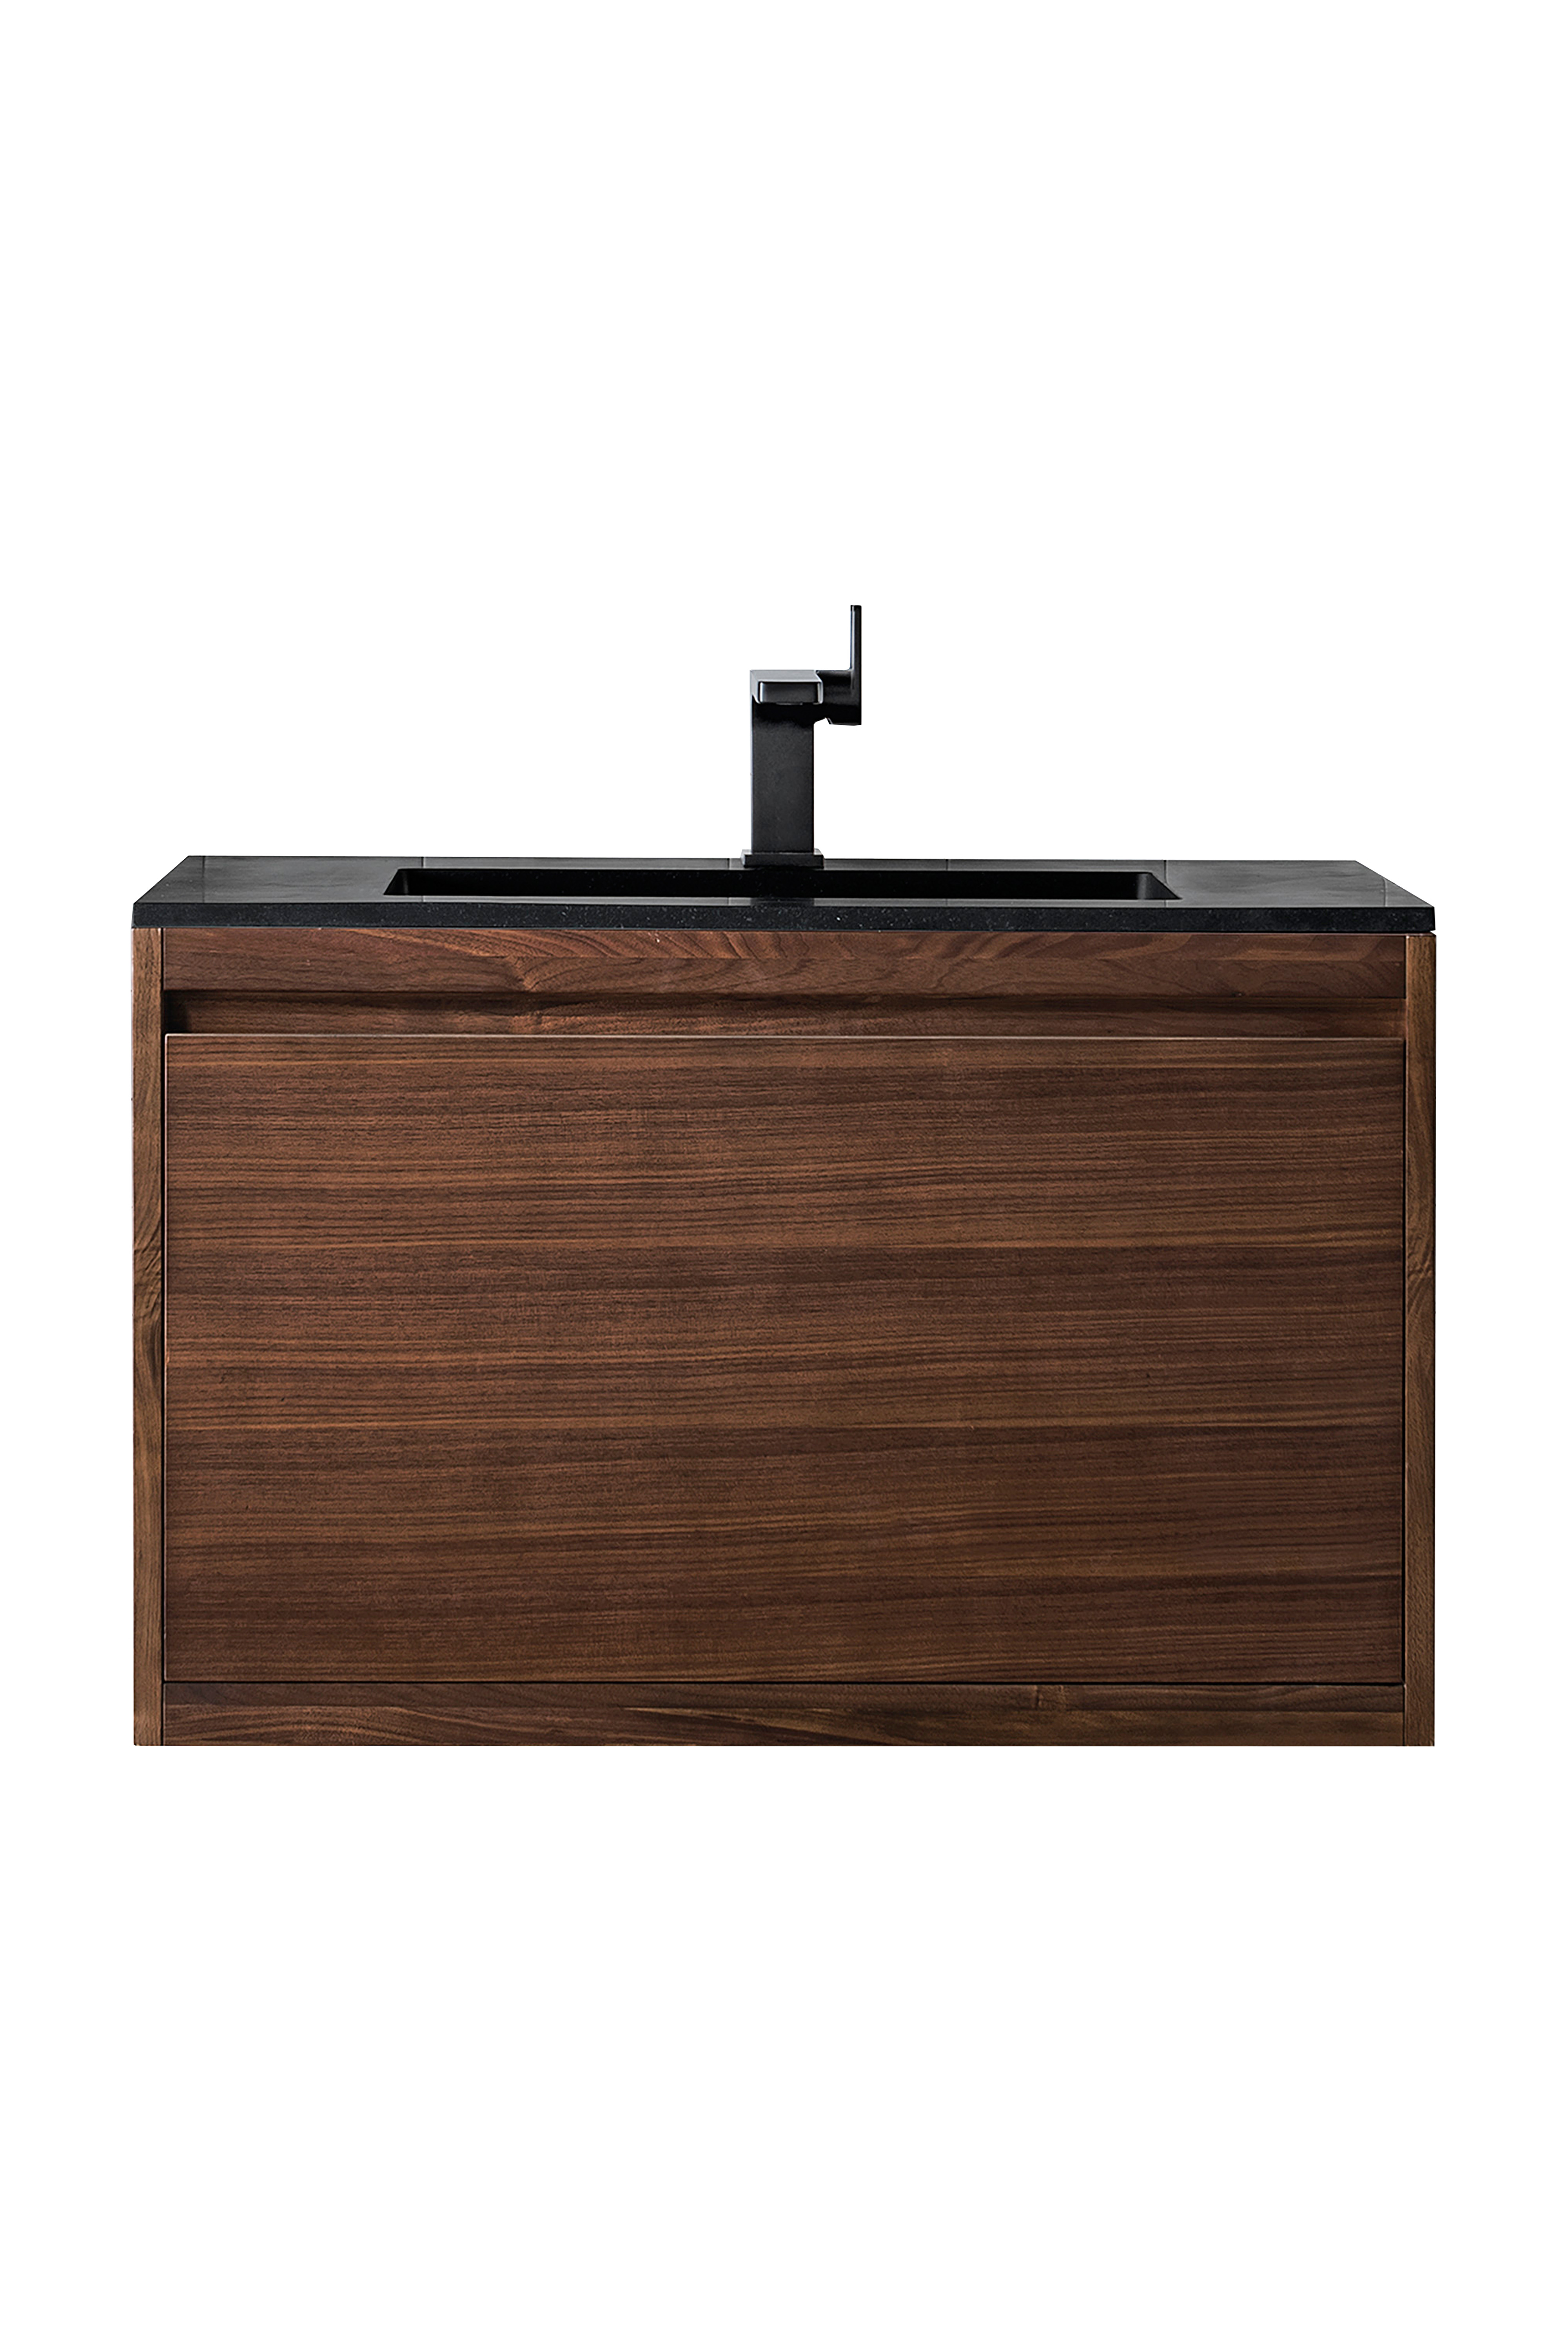 James Martin 801V35.4WLTCHB Milan 35.4" Single Vanity Cabinet, Mid Century Walnut w/Charcoal Black Composite Top